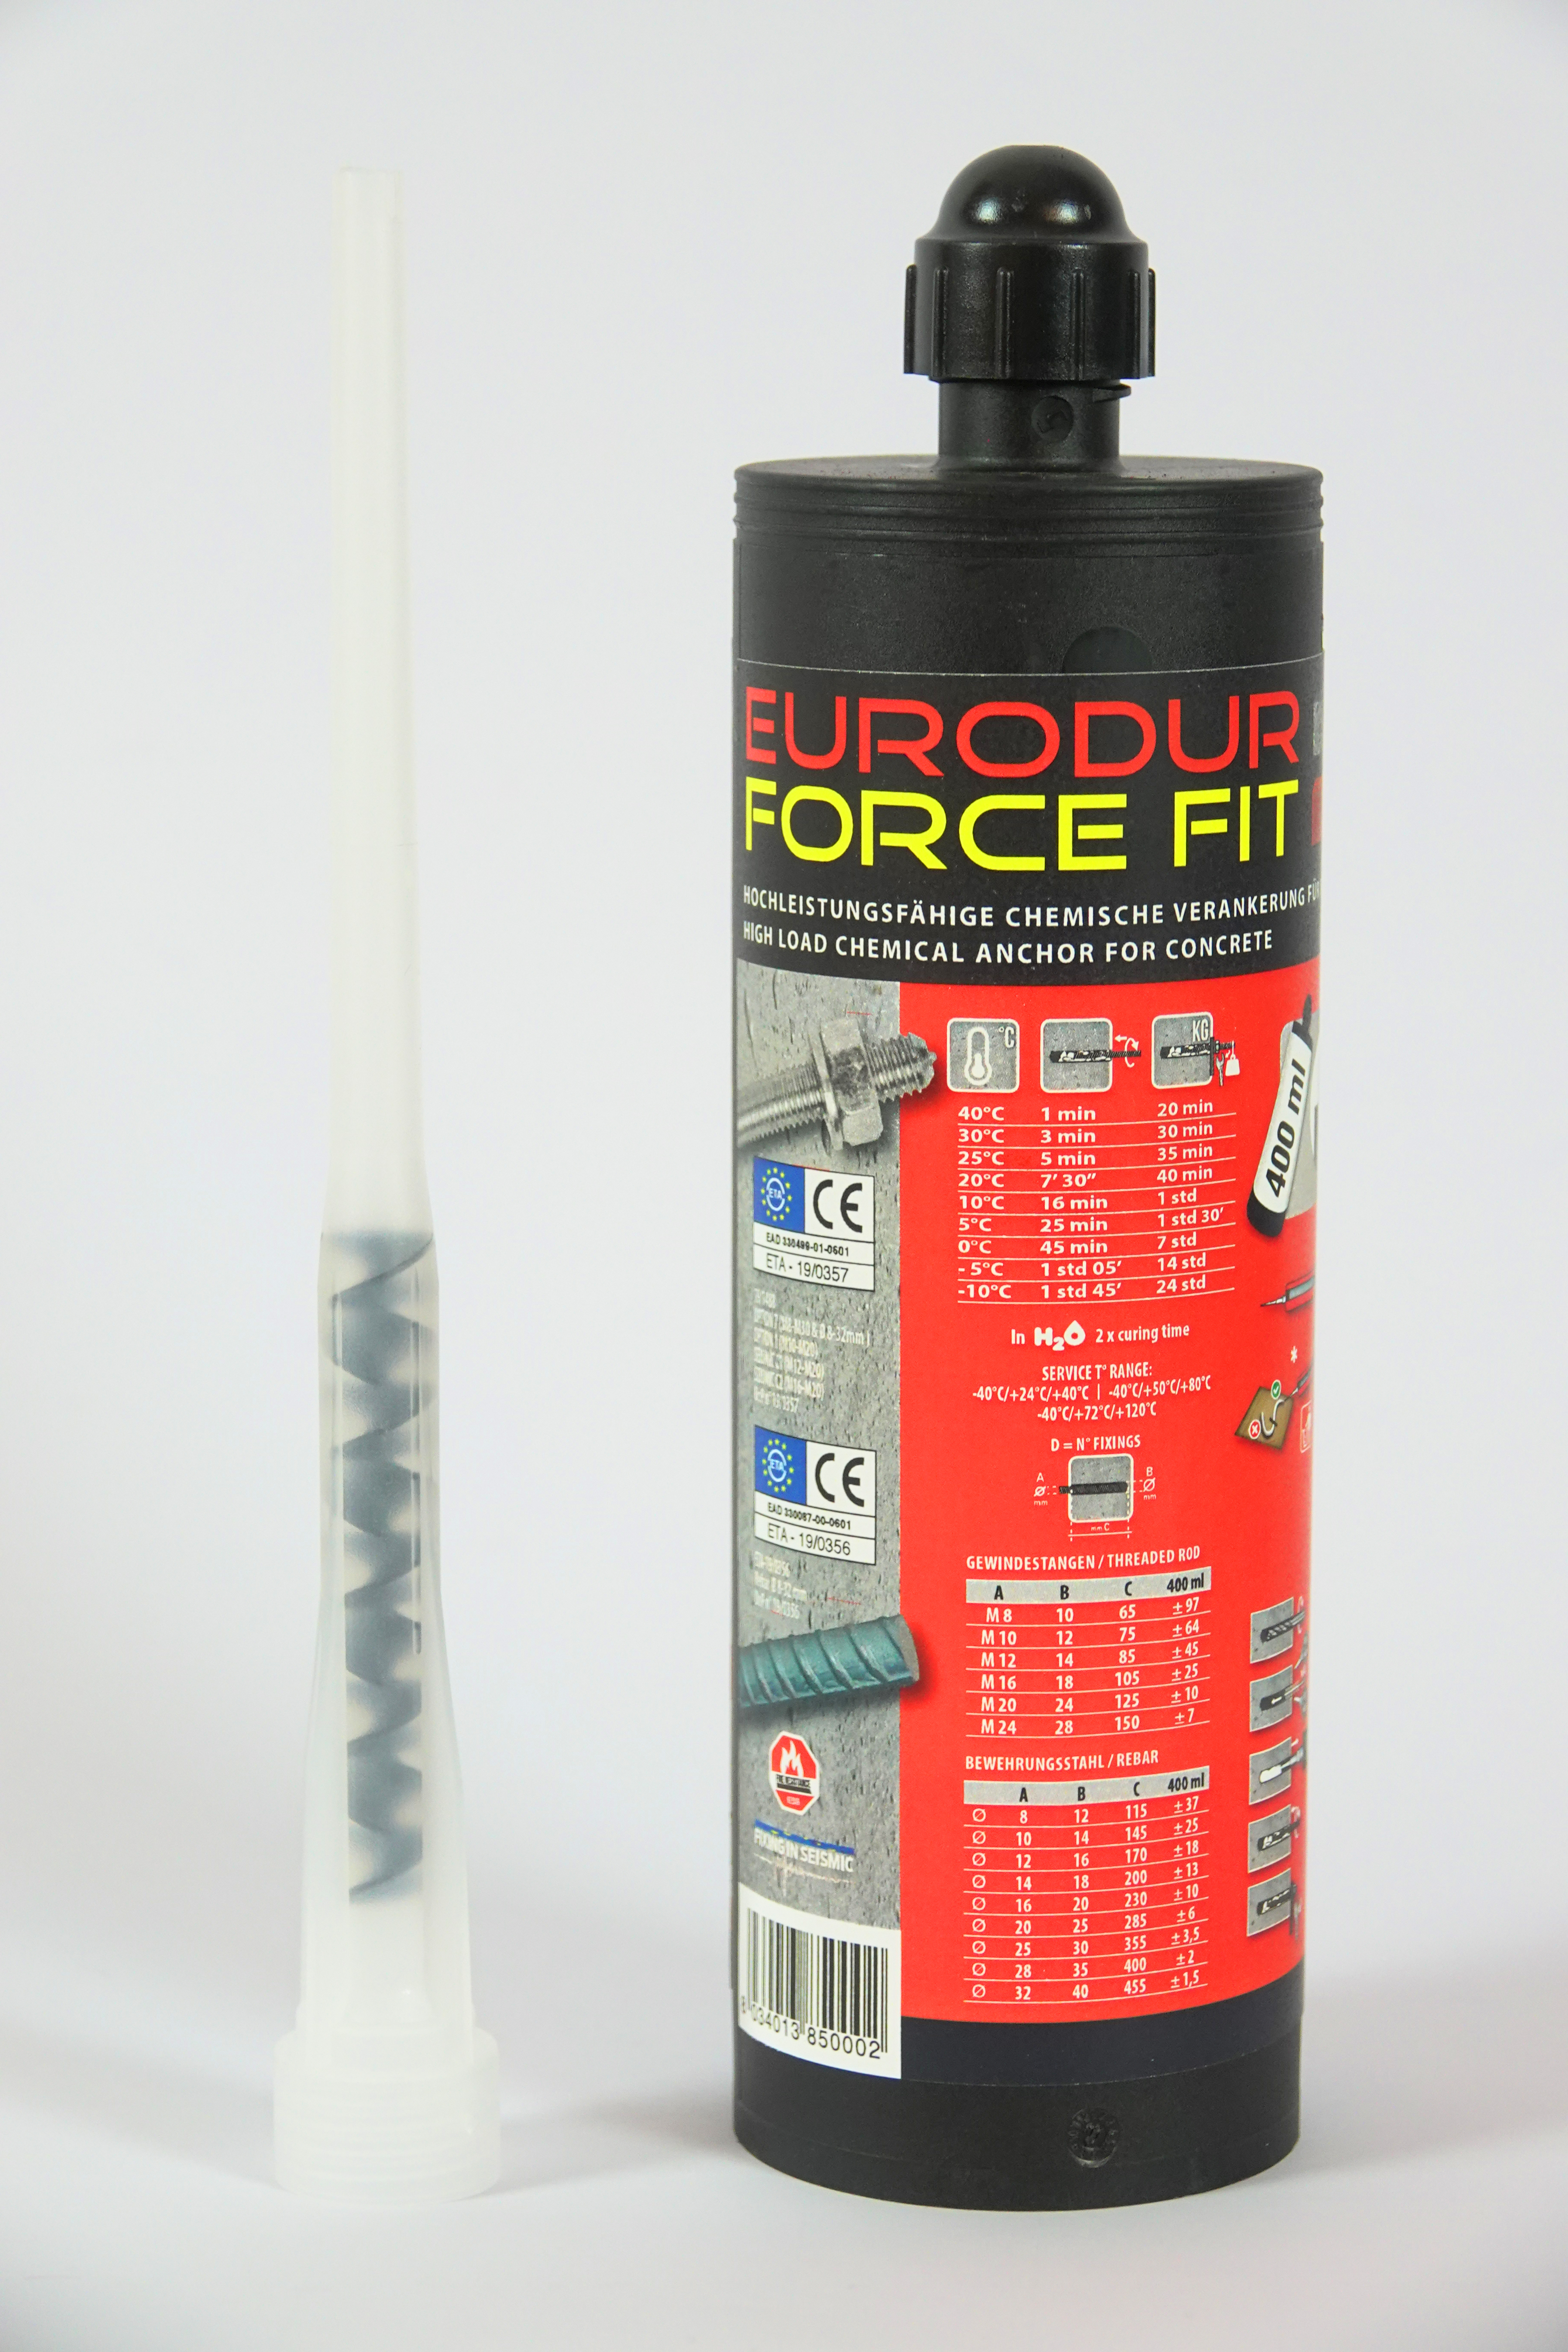 EURODUR force fit